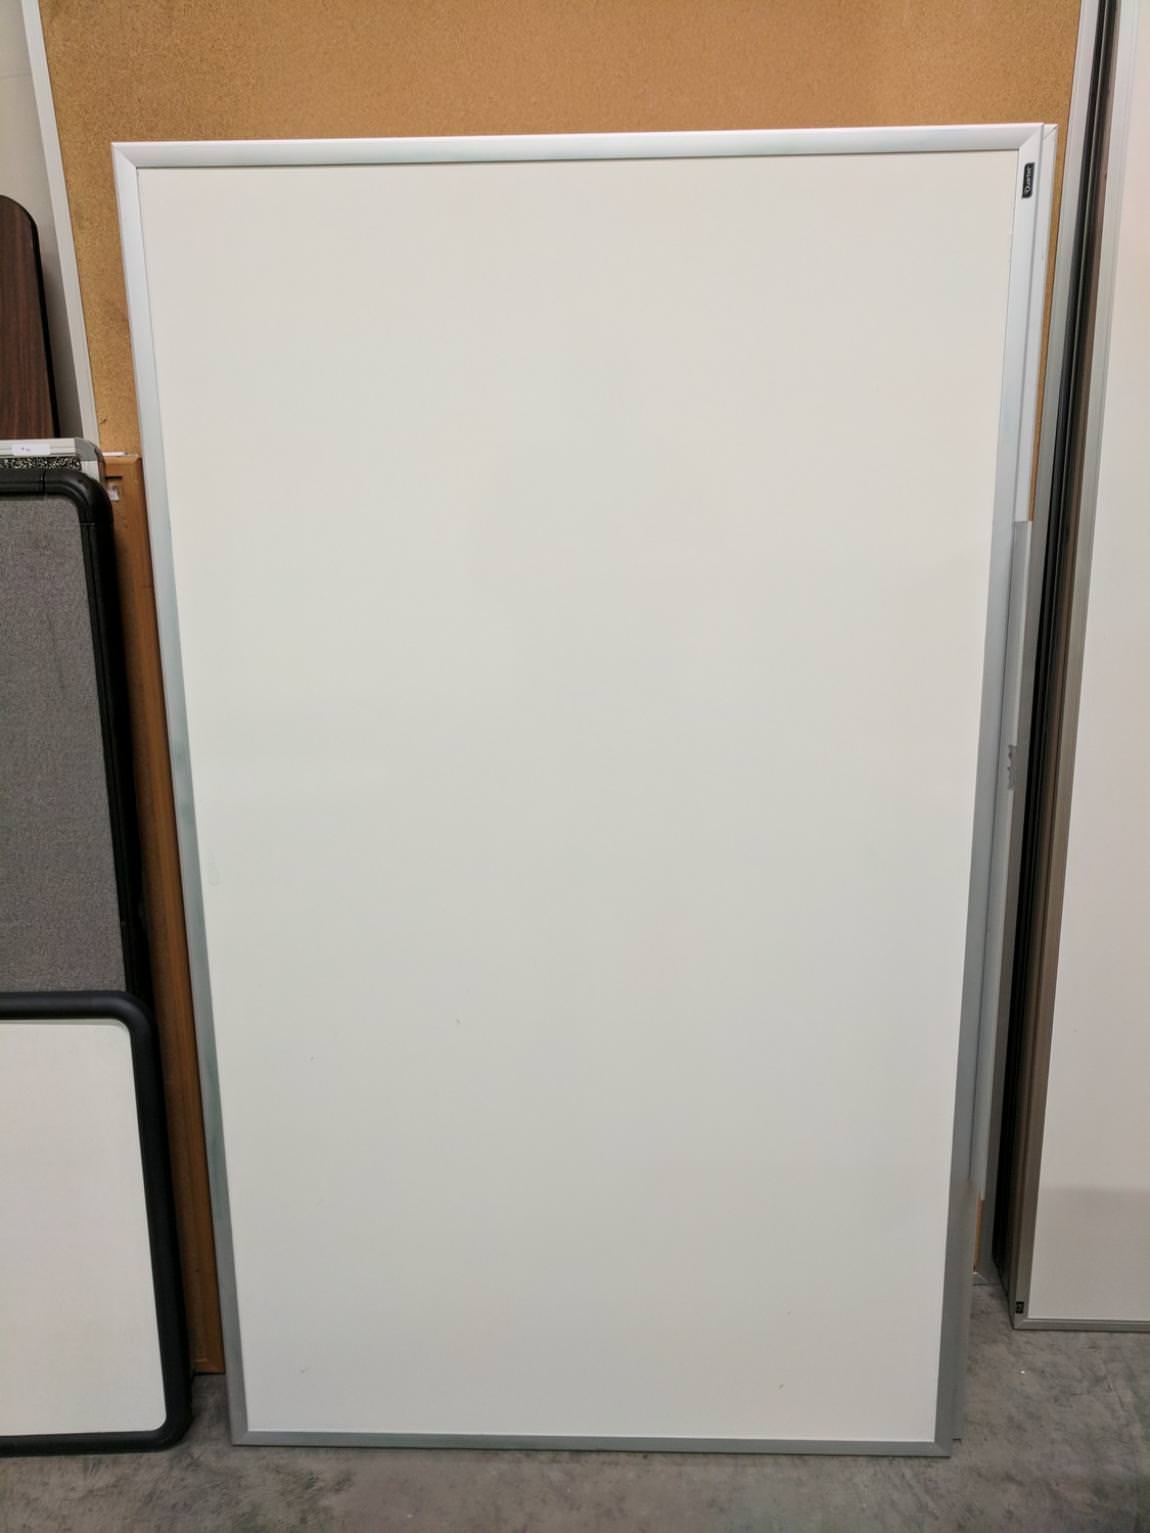 72x48 Dry Erase Whiteboards